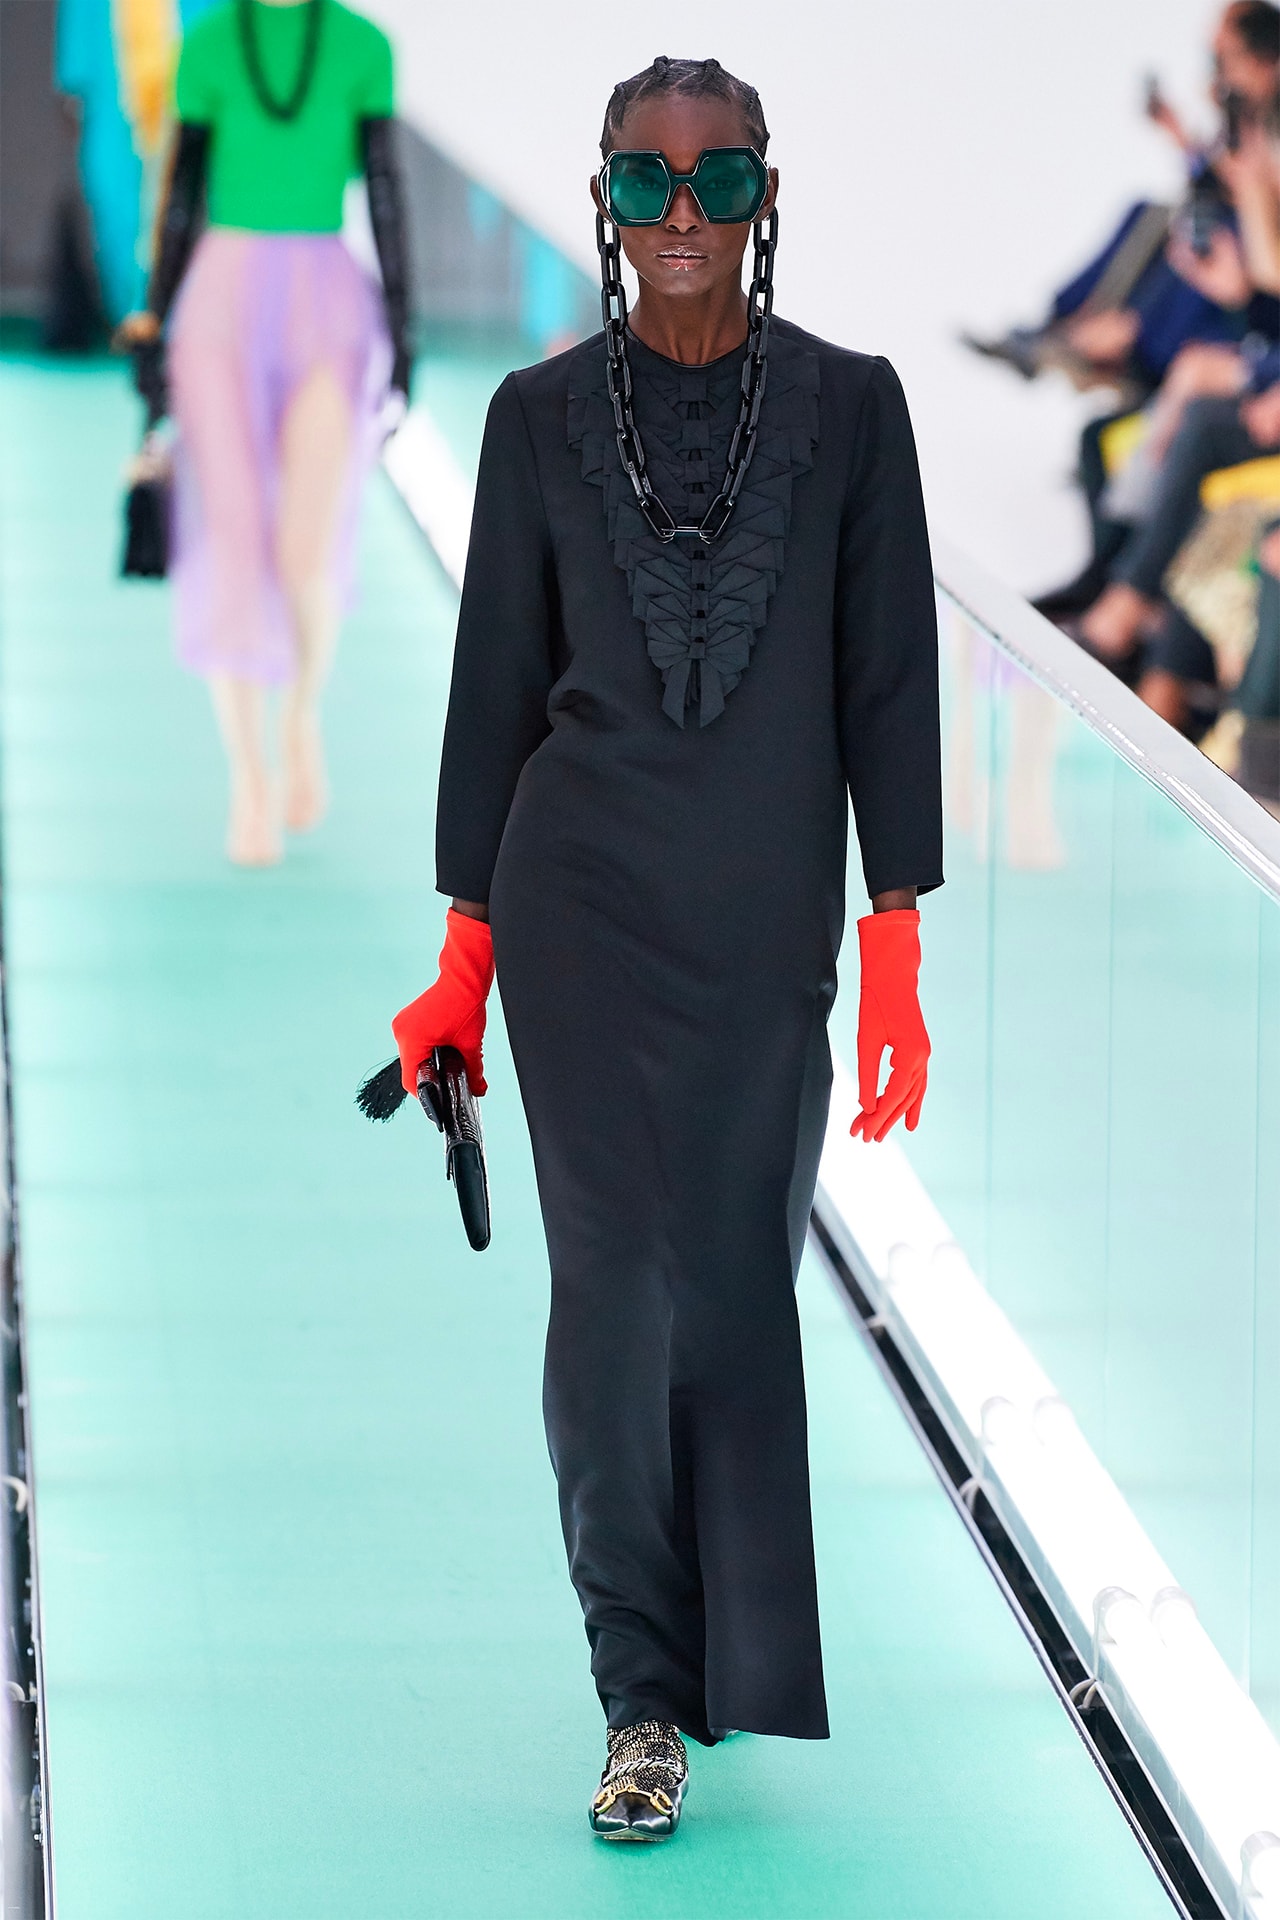 Gucci Orgasmique Spring Summer 2020 Runway Show Milan Fashion Week SS20 black dress sunglasses red gloves